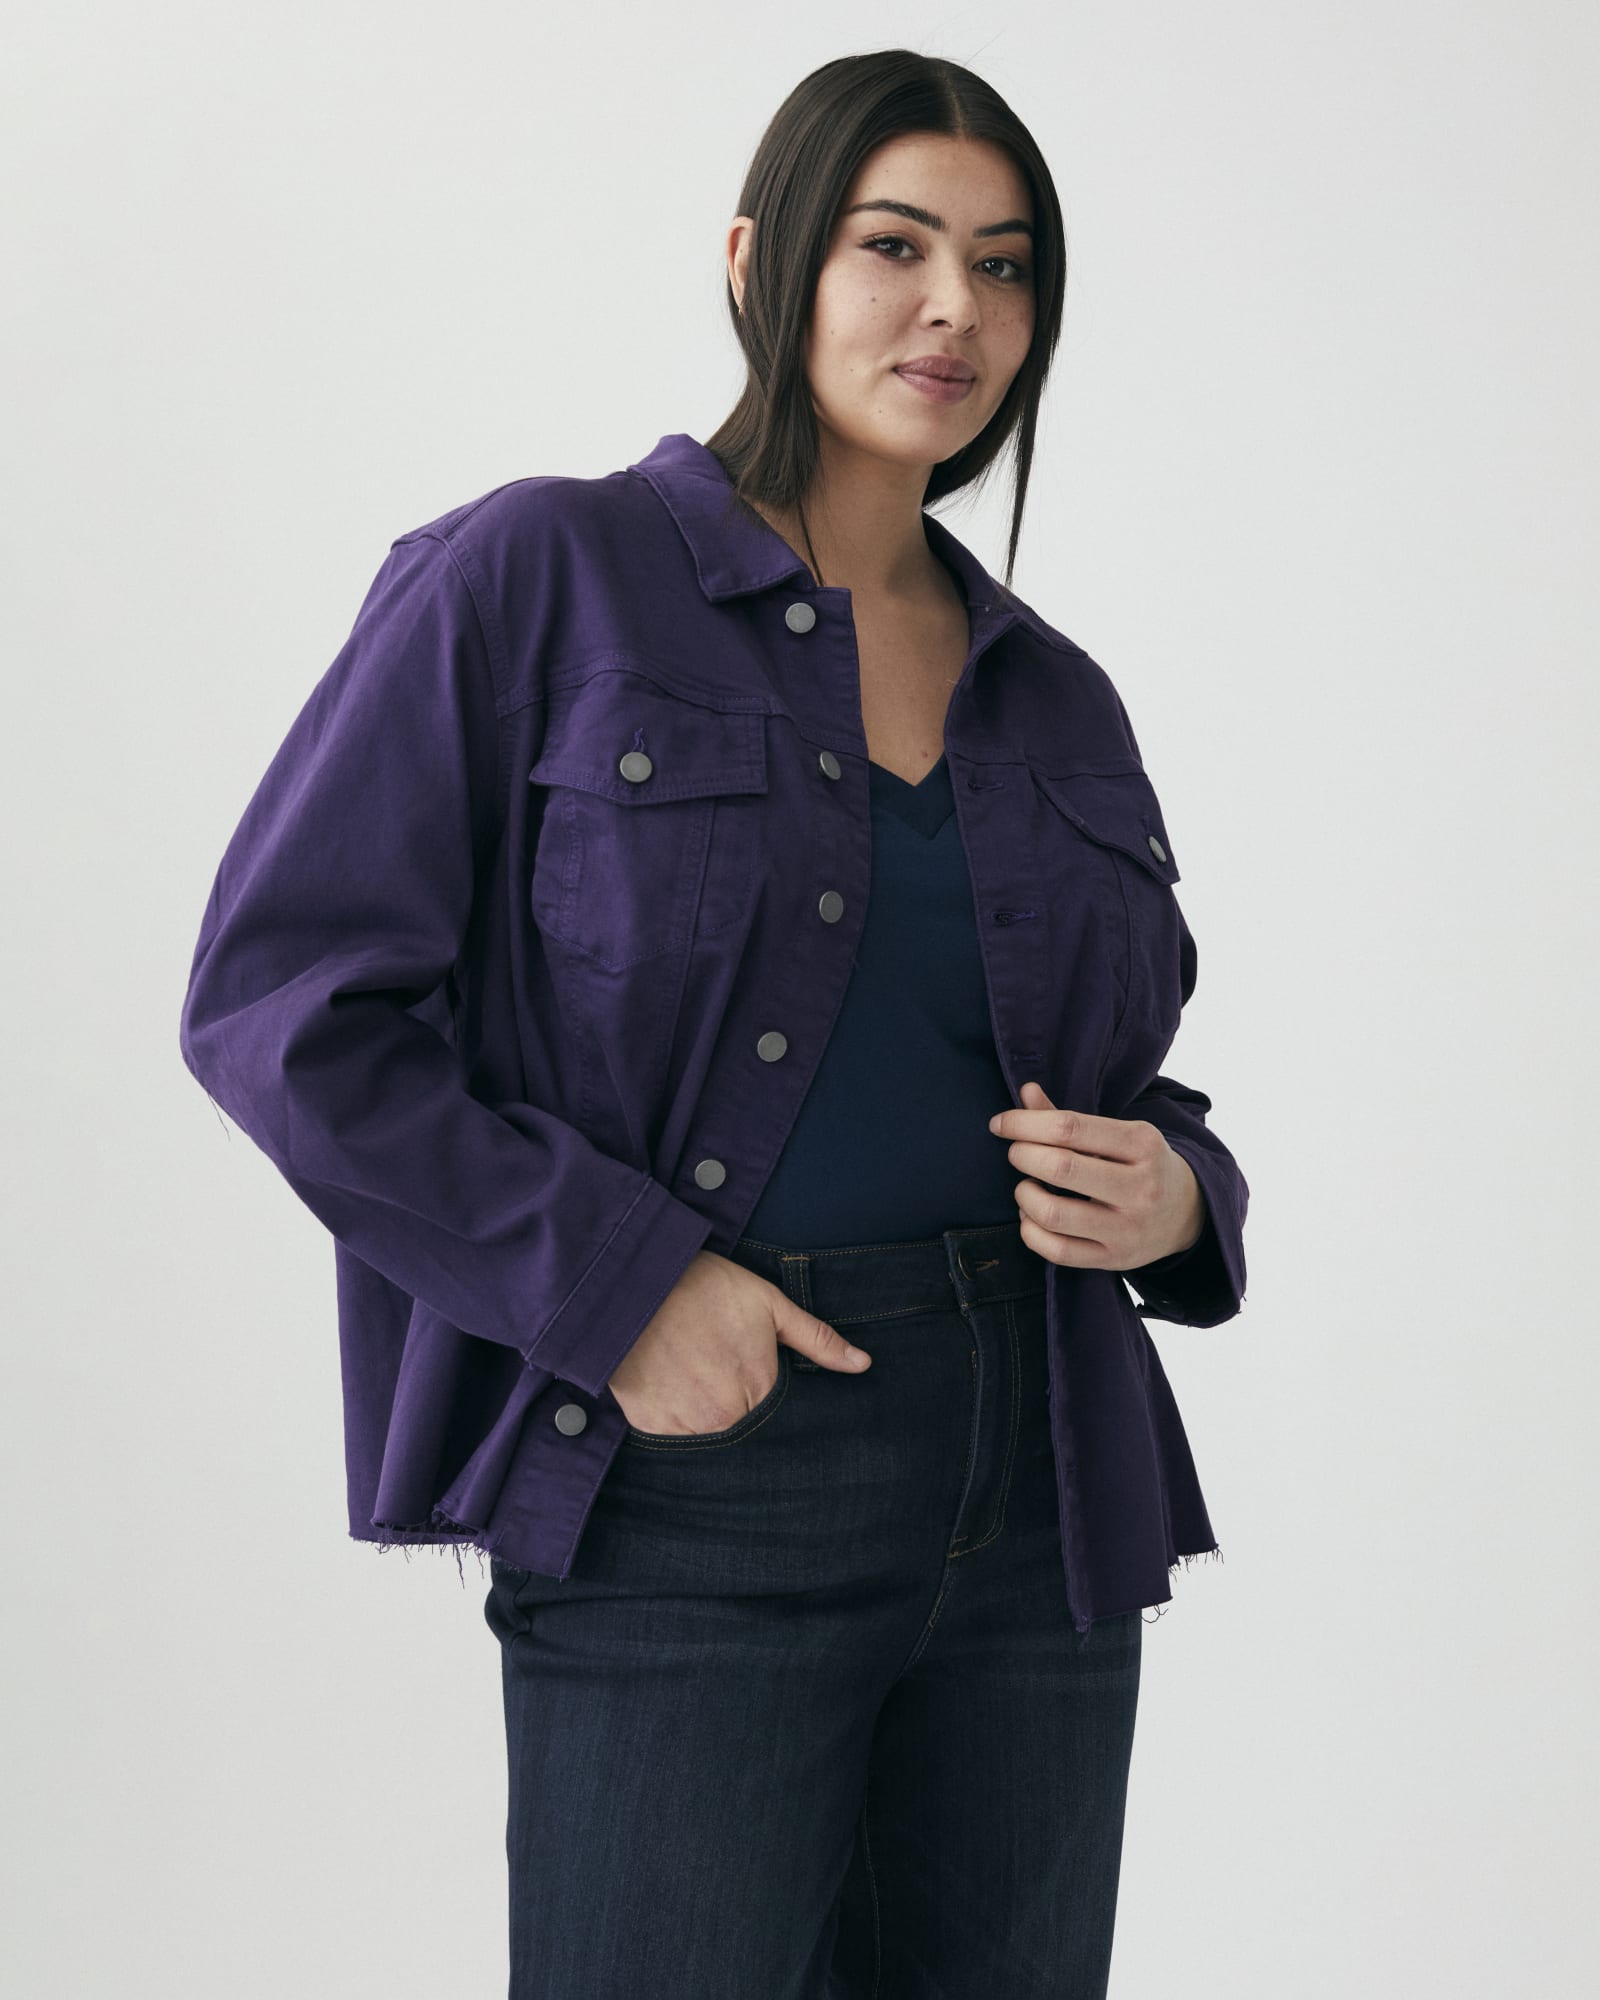 Plus Size Purple Denim Jacket